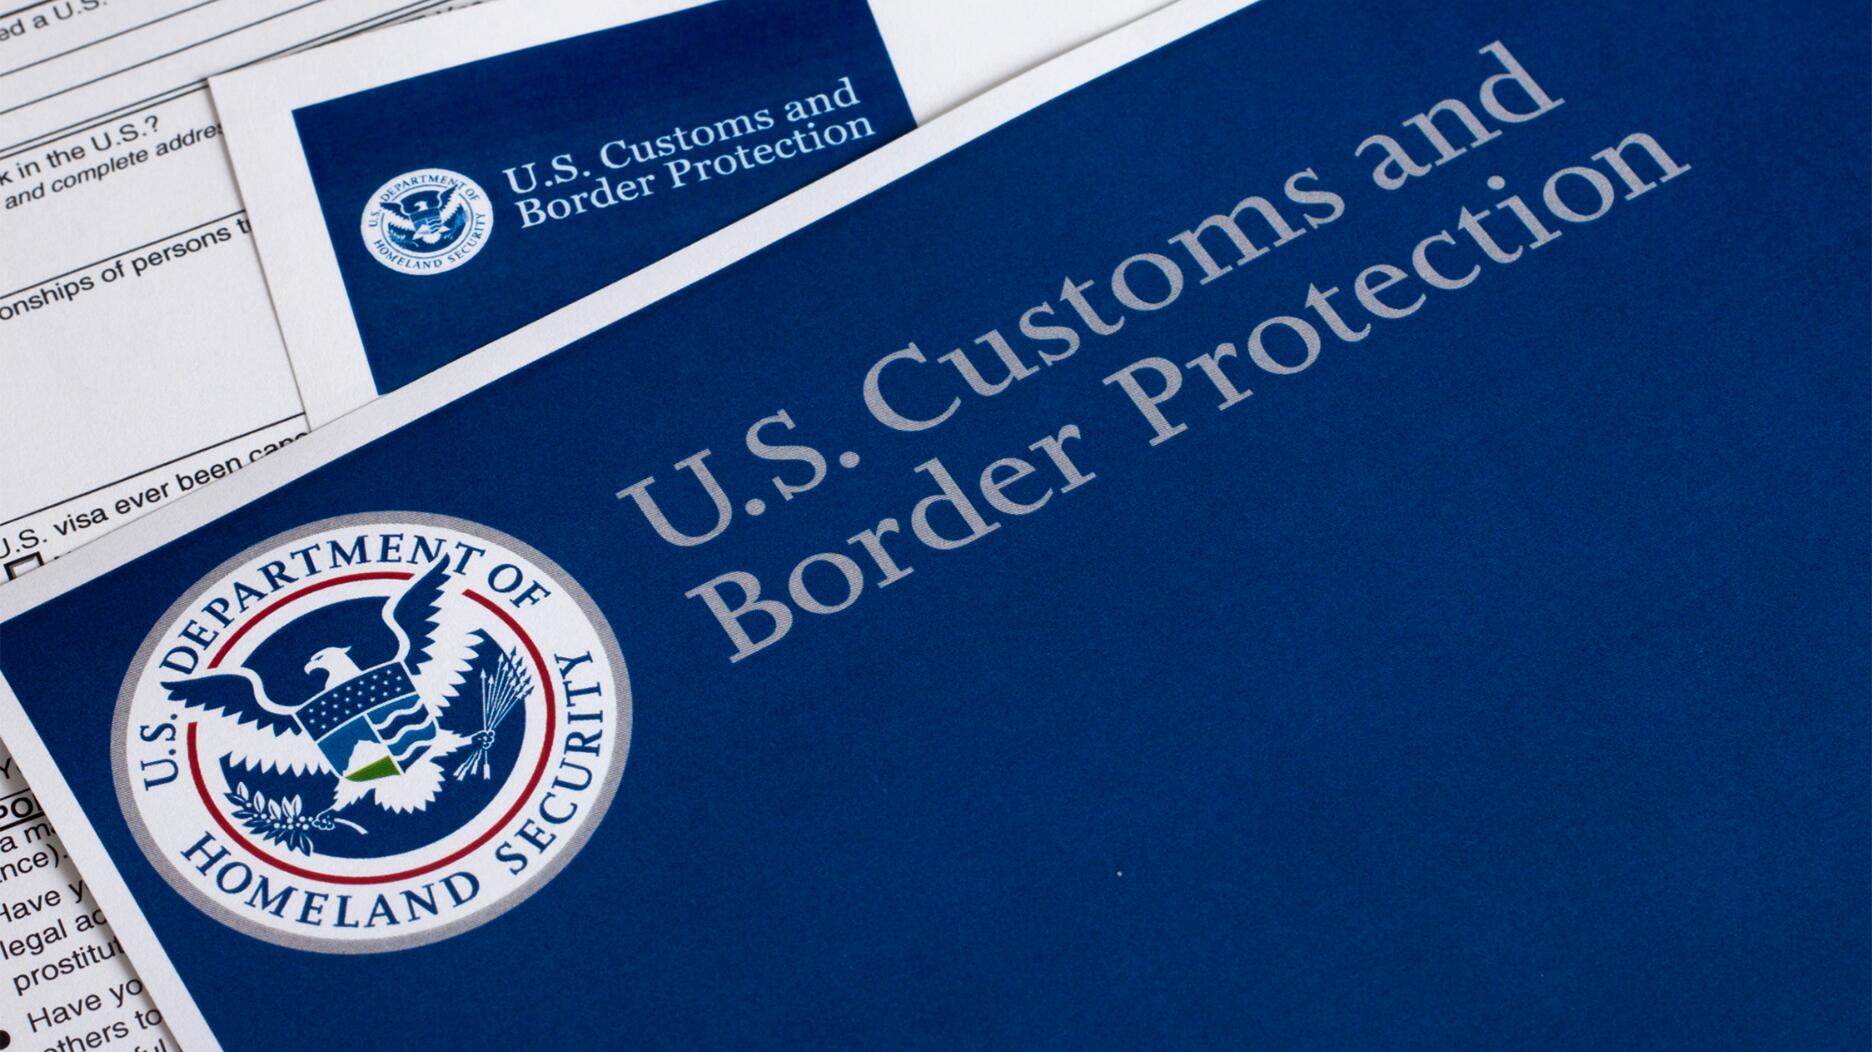 20210806_U.S. Customs and Border Protection logo.jpg